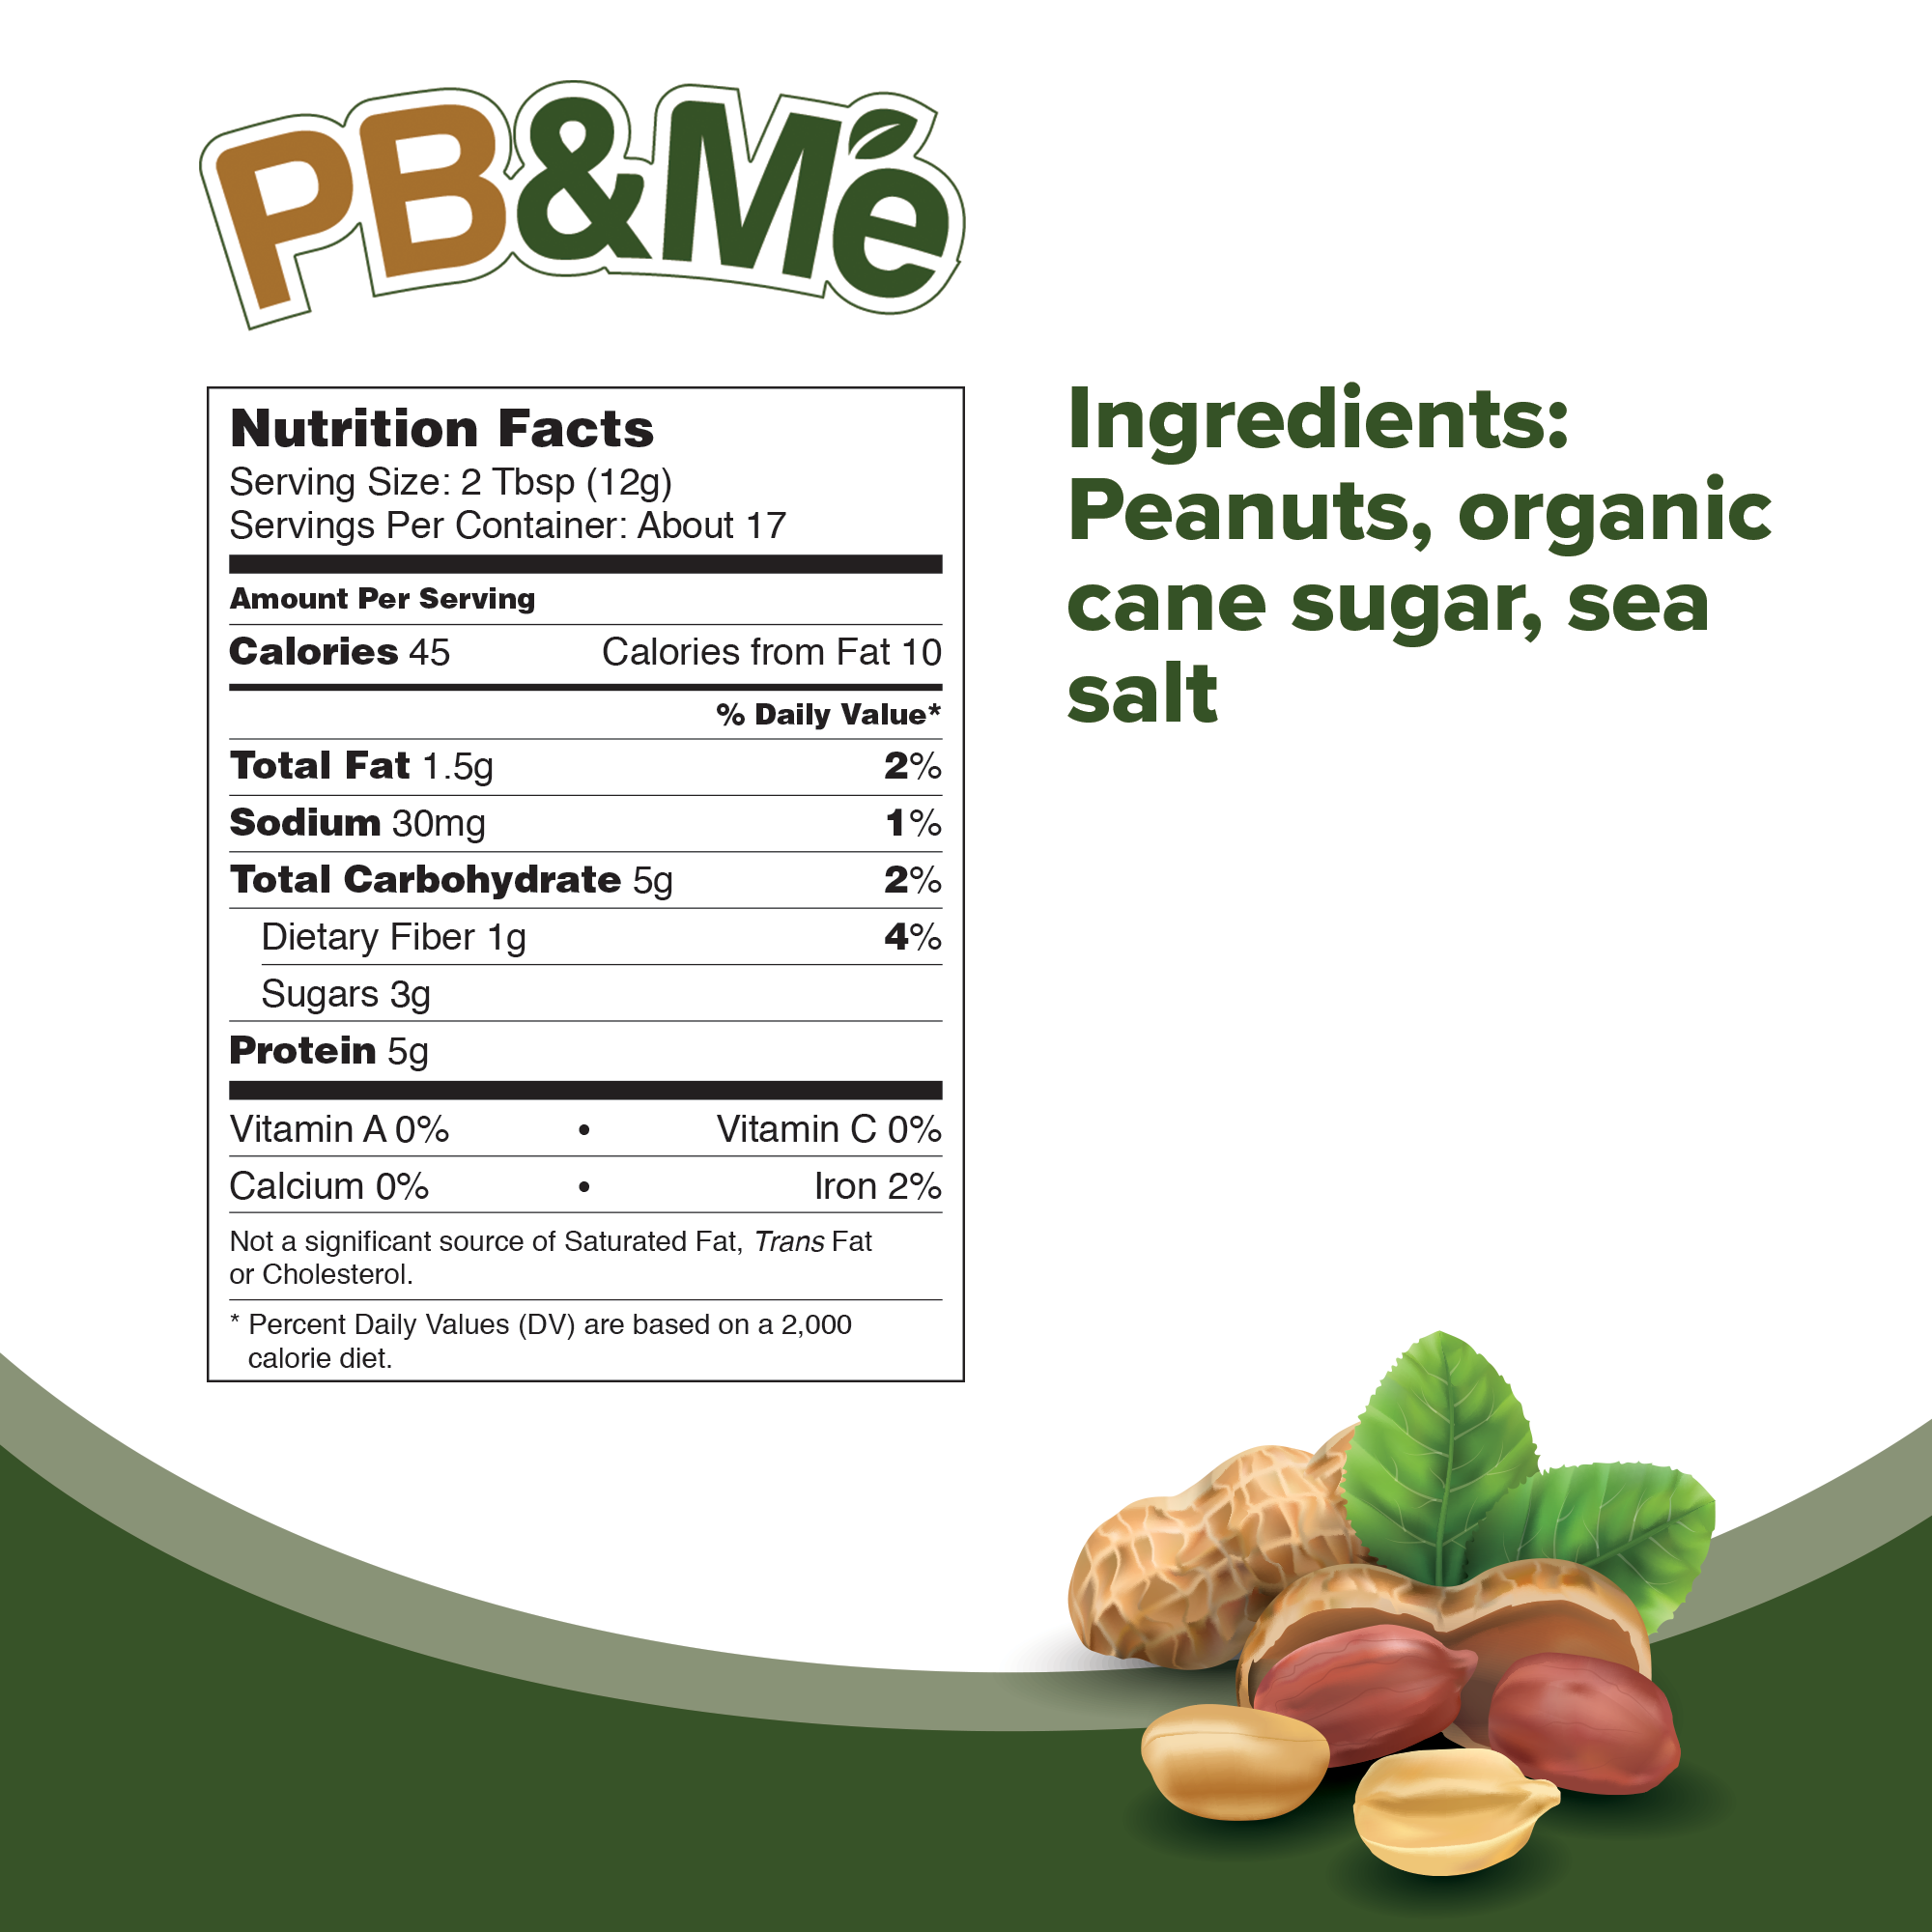 Organic Powdered Peanut Butter - Original (1LB)